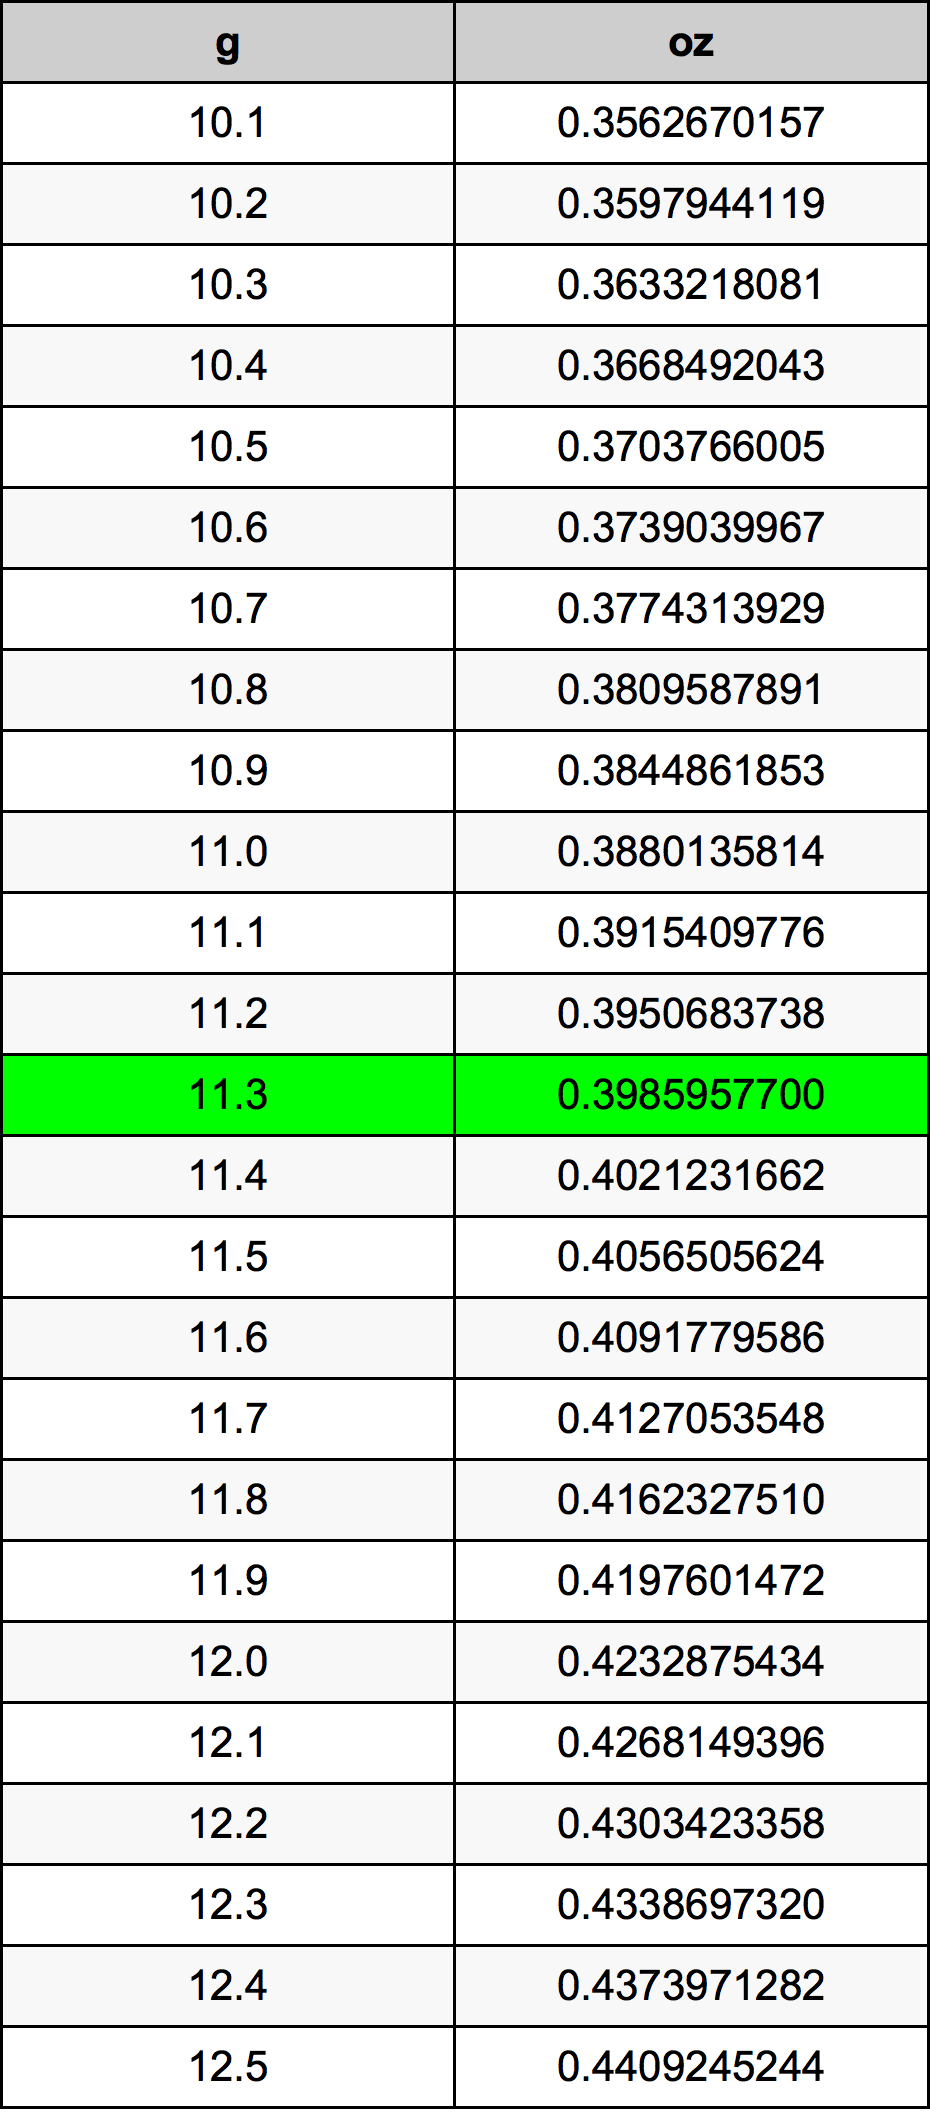 11.3 غرام جدول تحويل